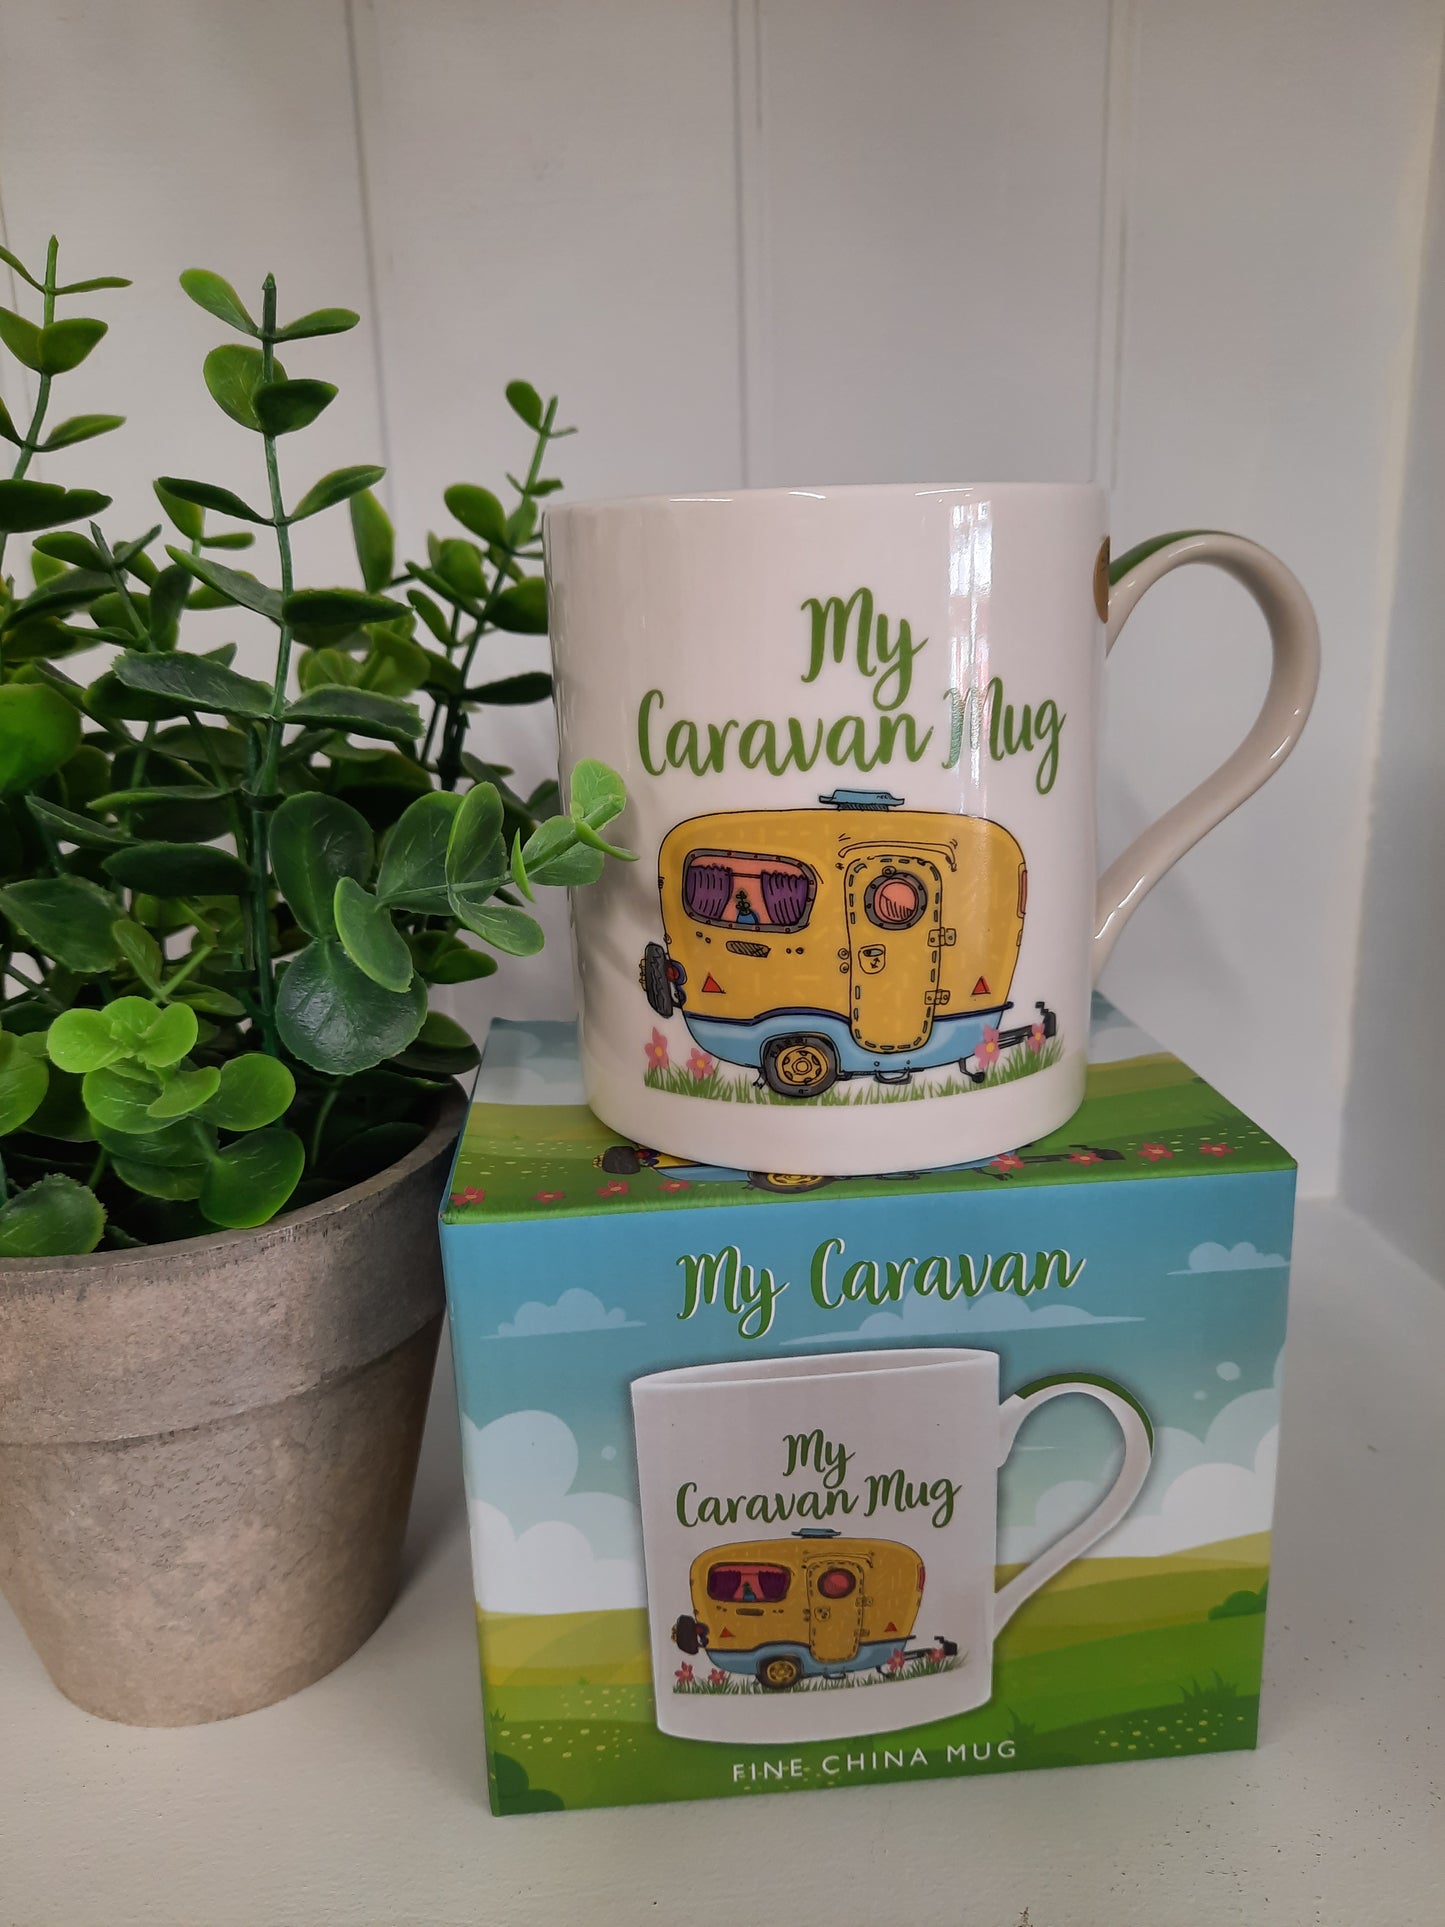 My Caravan Mug